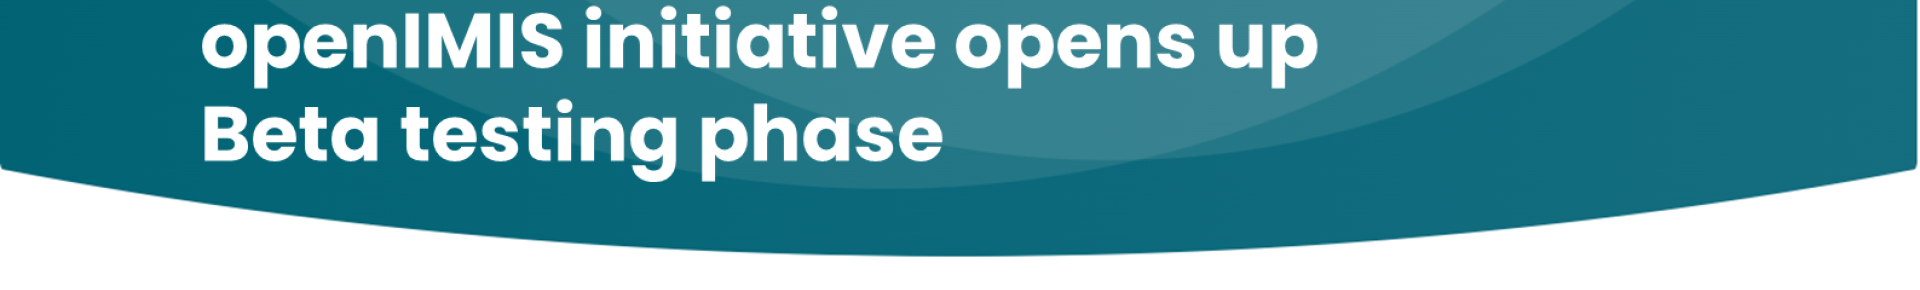 openIMIS initiative opens up beta testing phase 